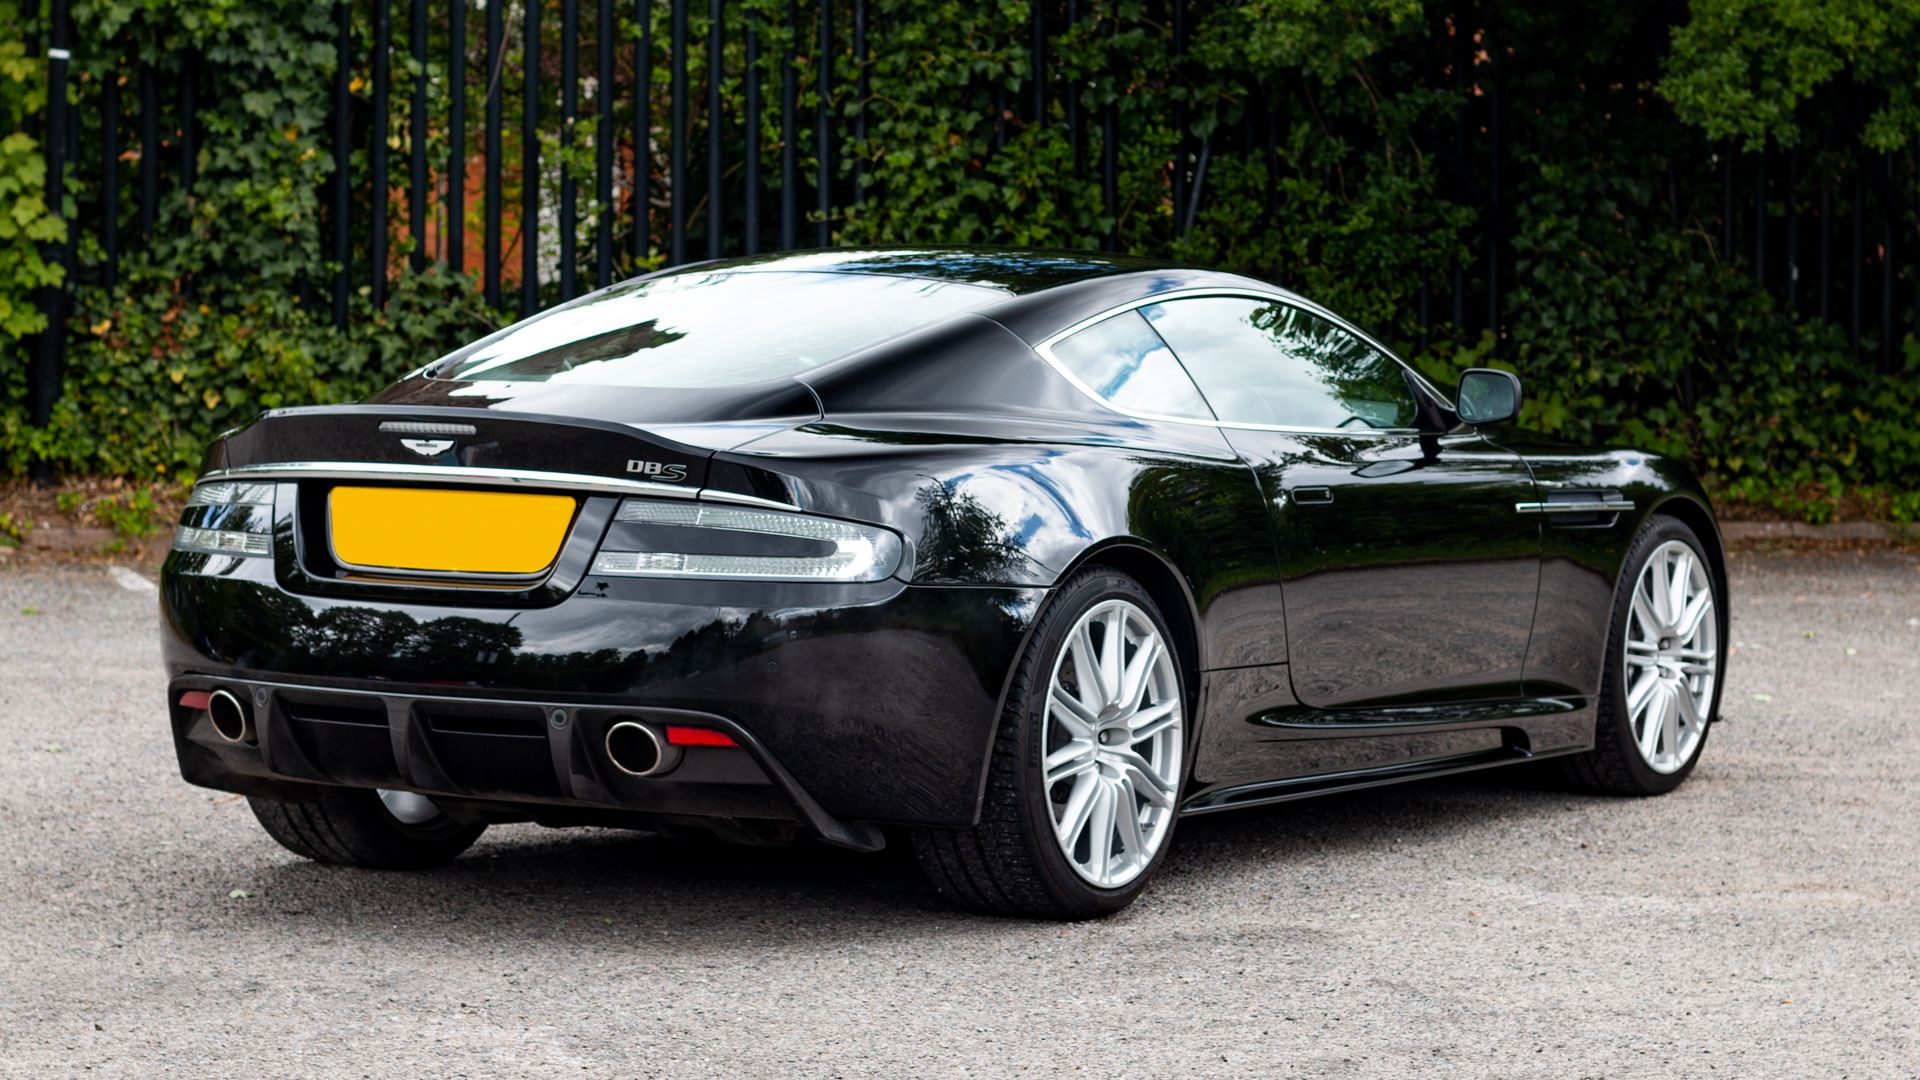 Sold 2008 Aston Martin DBS Coupe | Official UK Koenigsegg Dealer